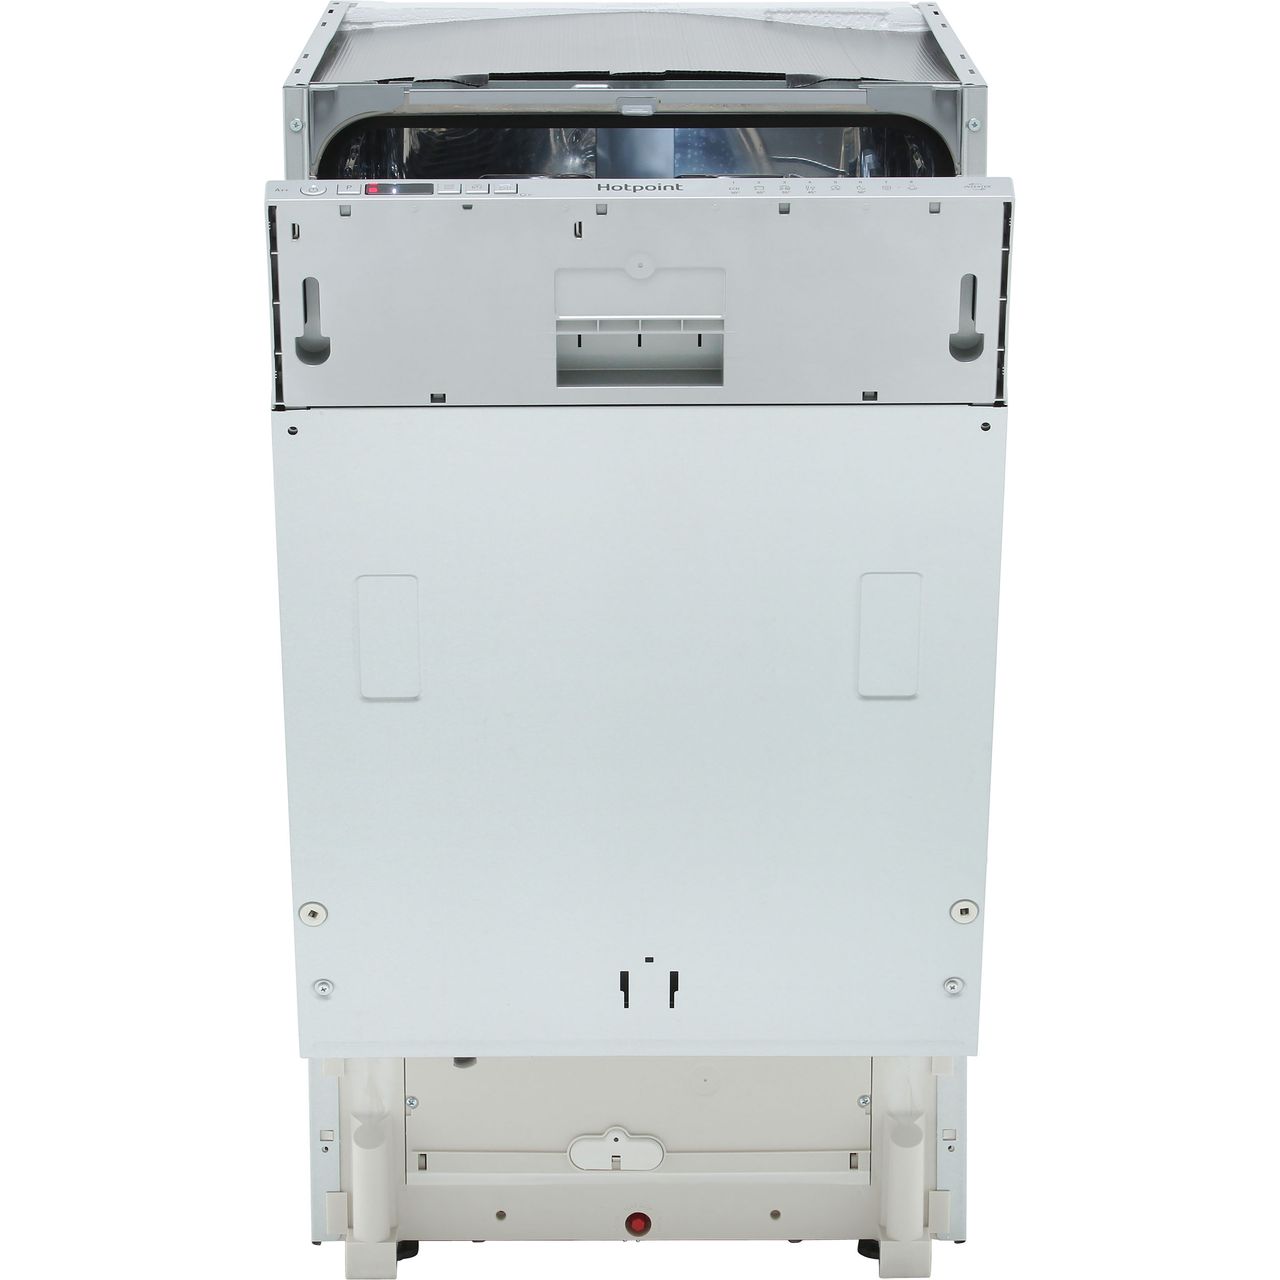 Hotpoint HSIC3T127UK Fully Integrated Slimline Dishwasher Review